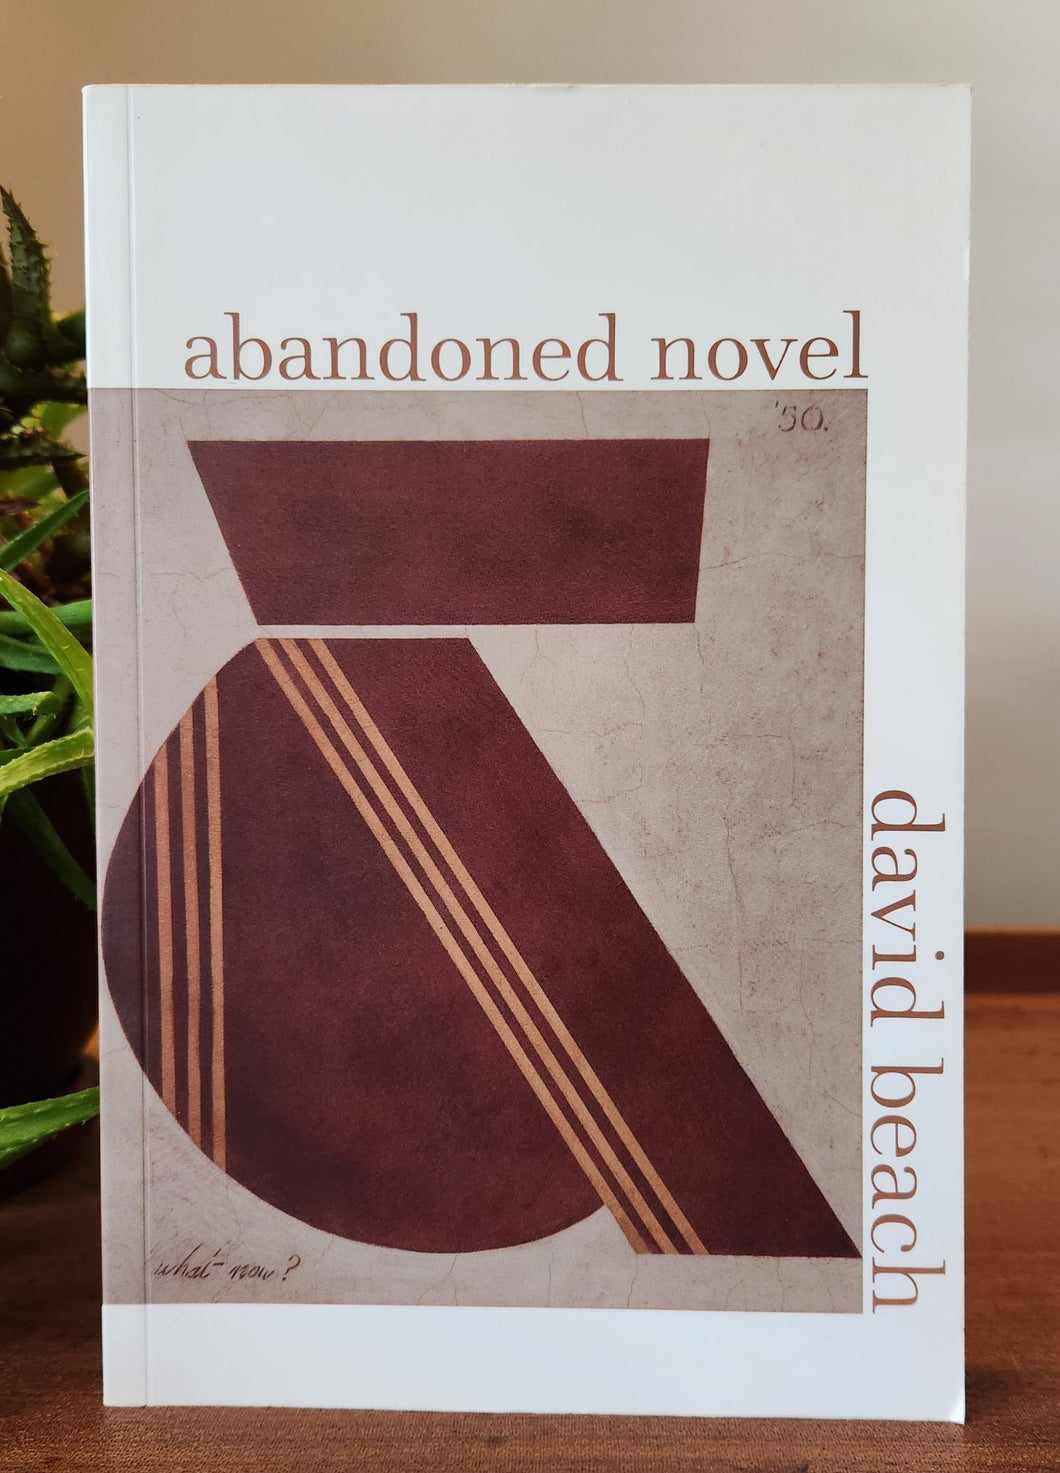 Abandoned Novel by David Beach